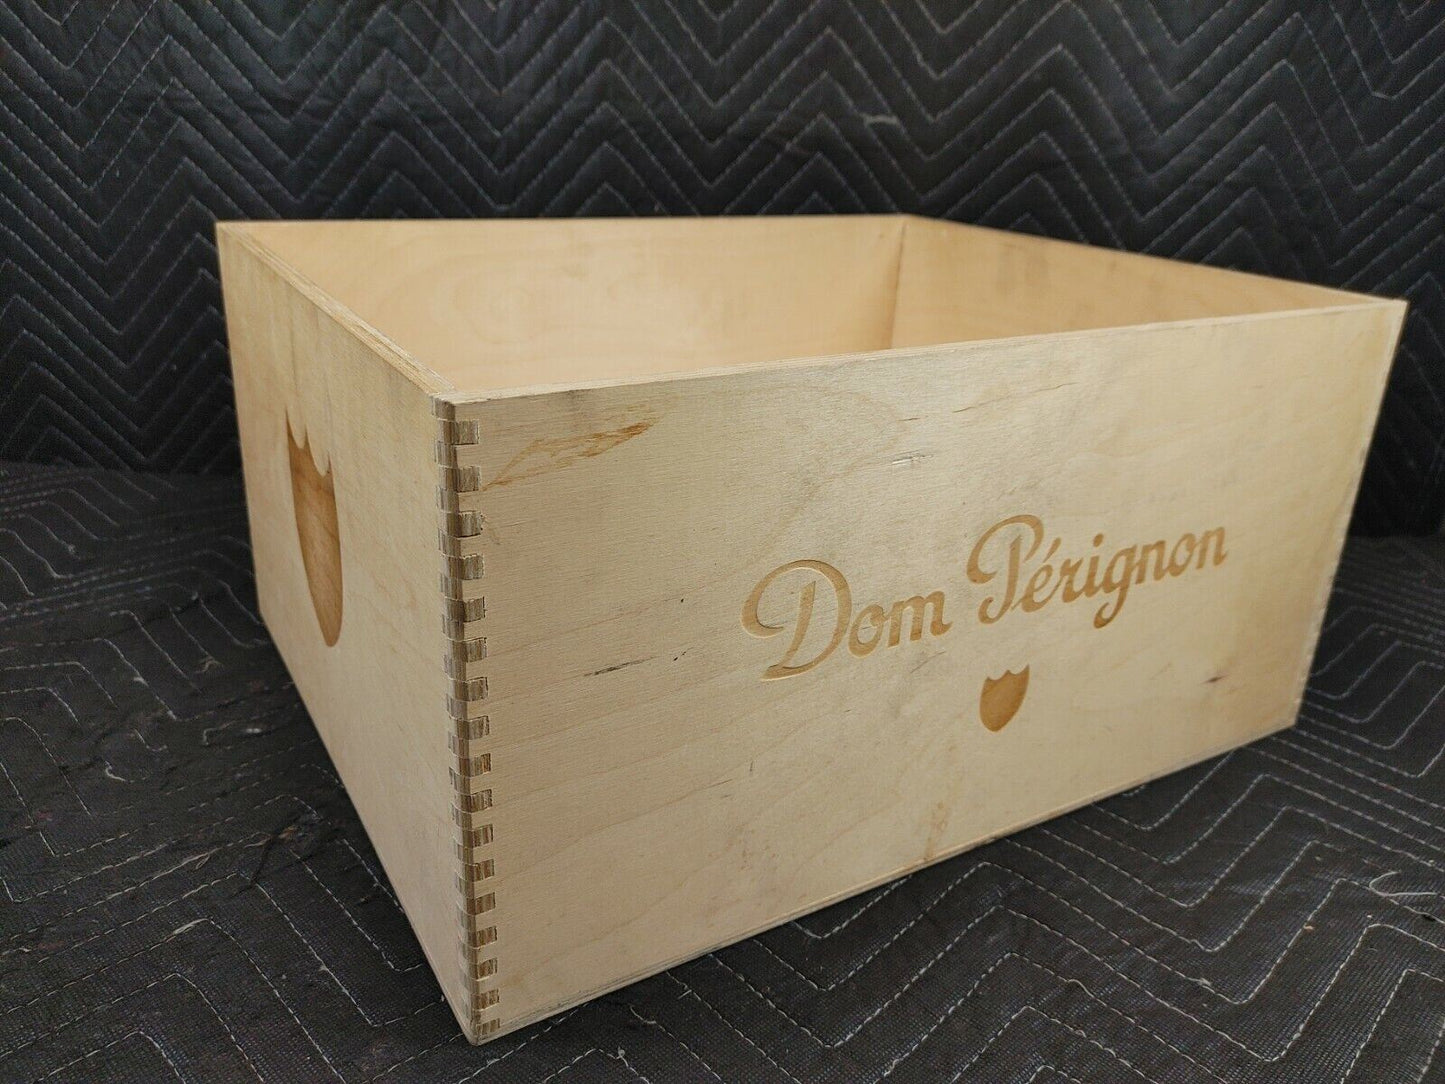 Vntg Dom Pérignon empty Wood Champagne Box Crate